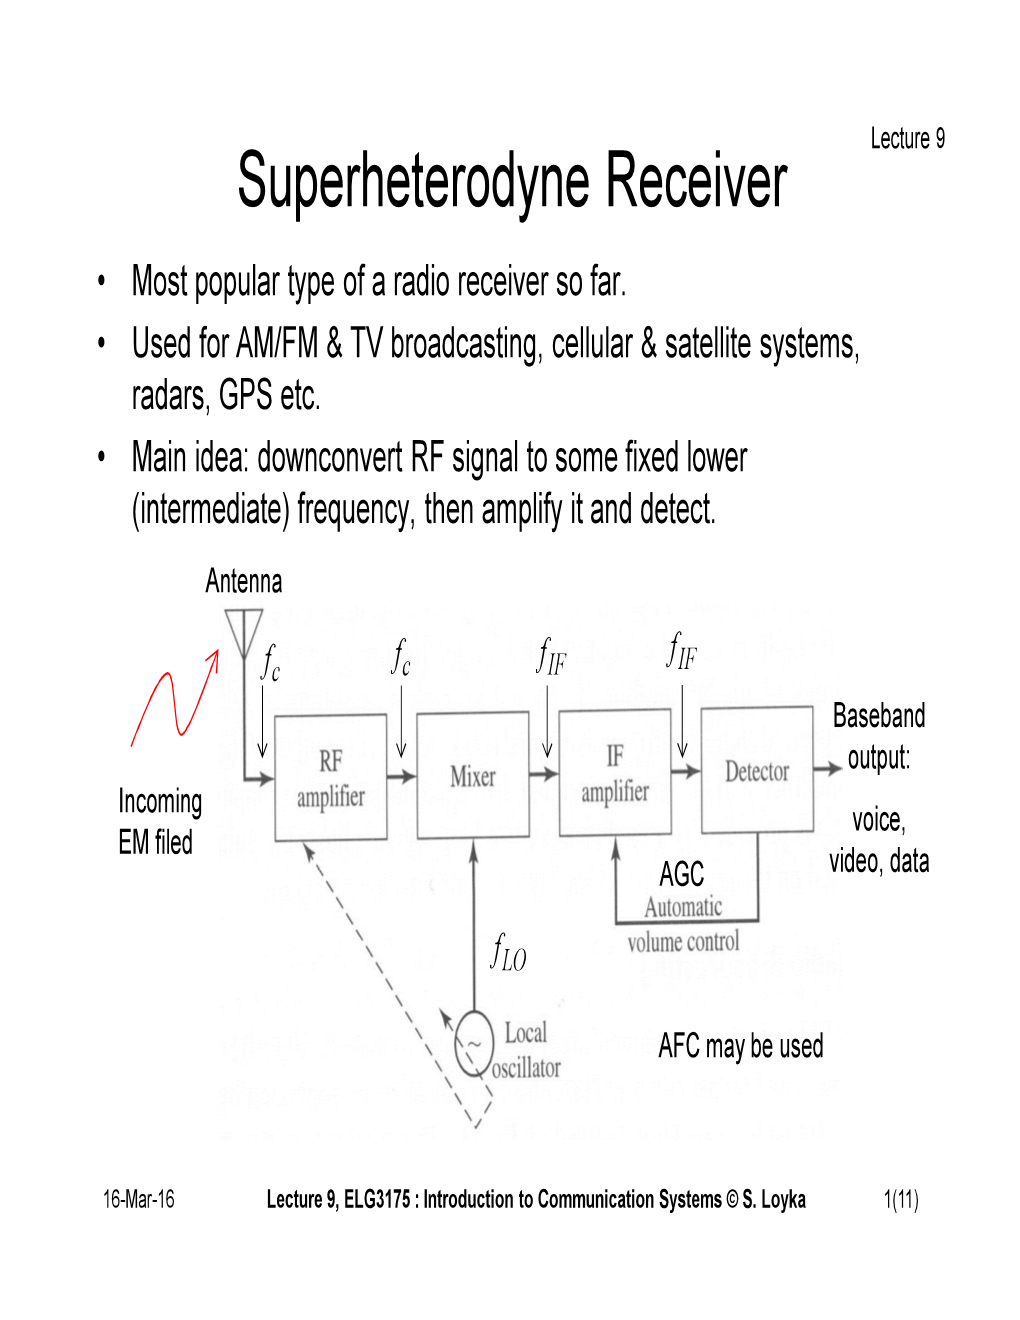 Superheterodyne Receiver • Most Popular Type of a Radio Receiver So Far